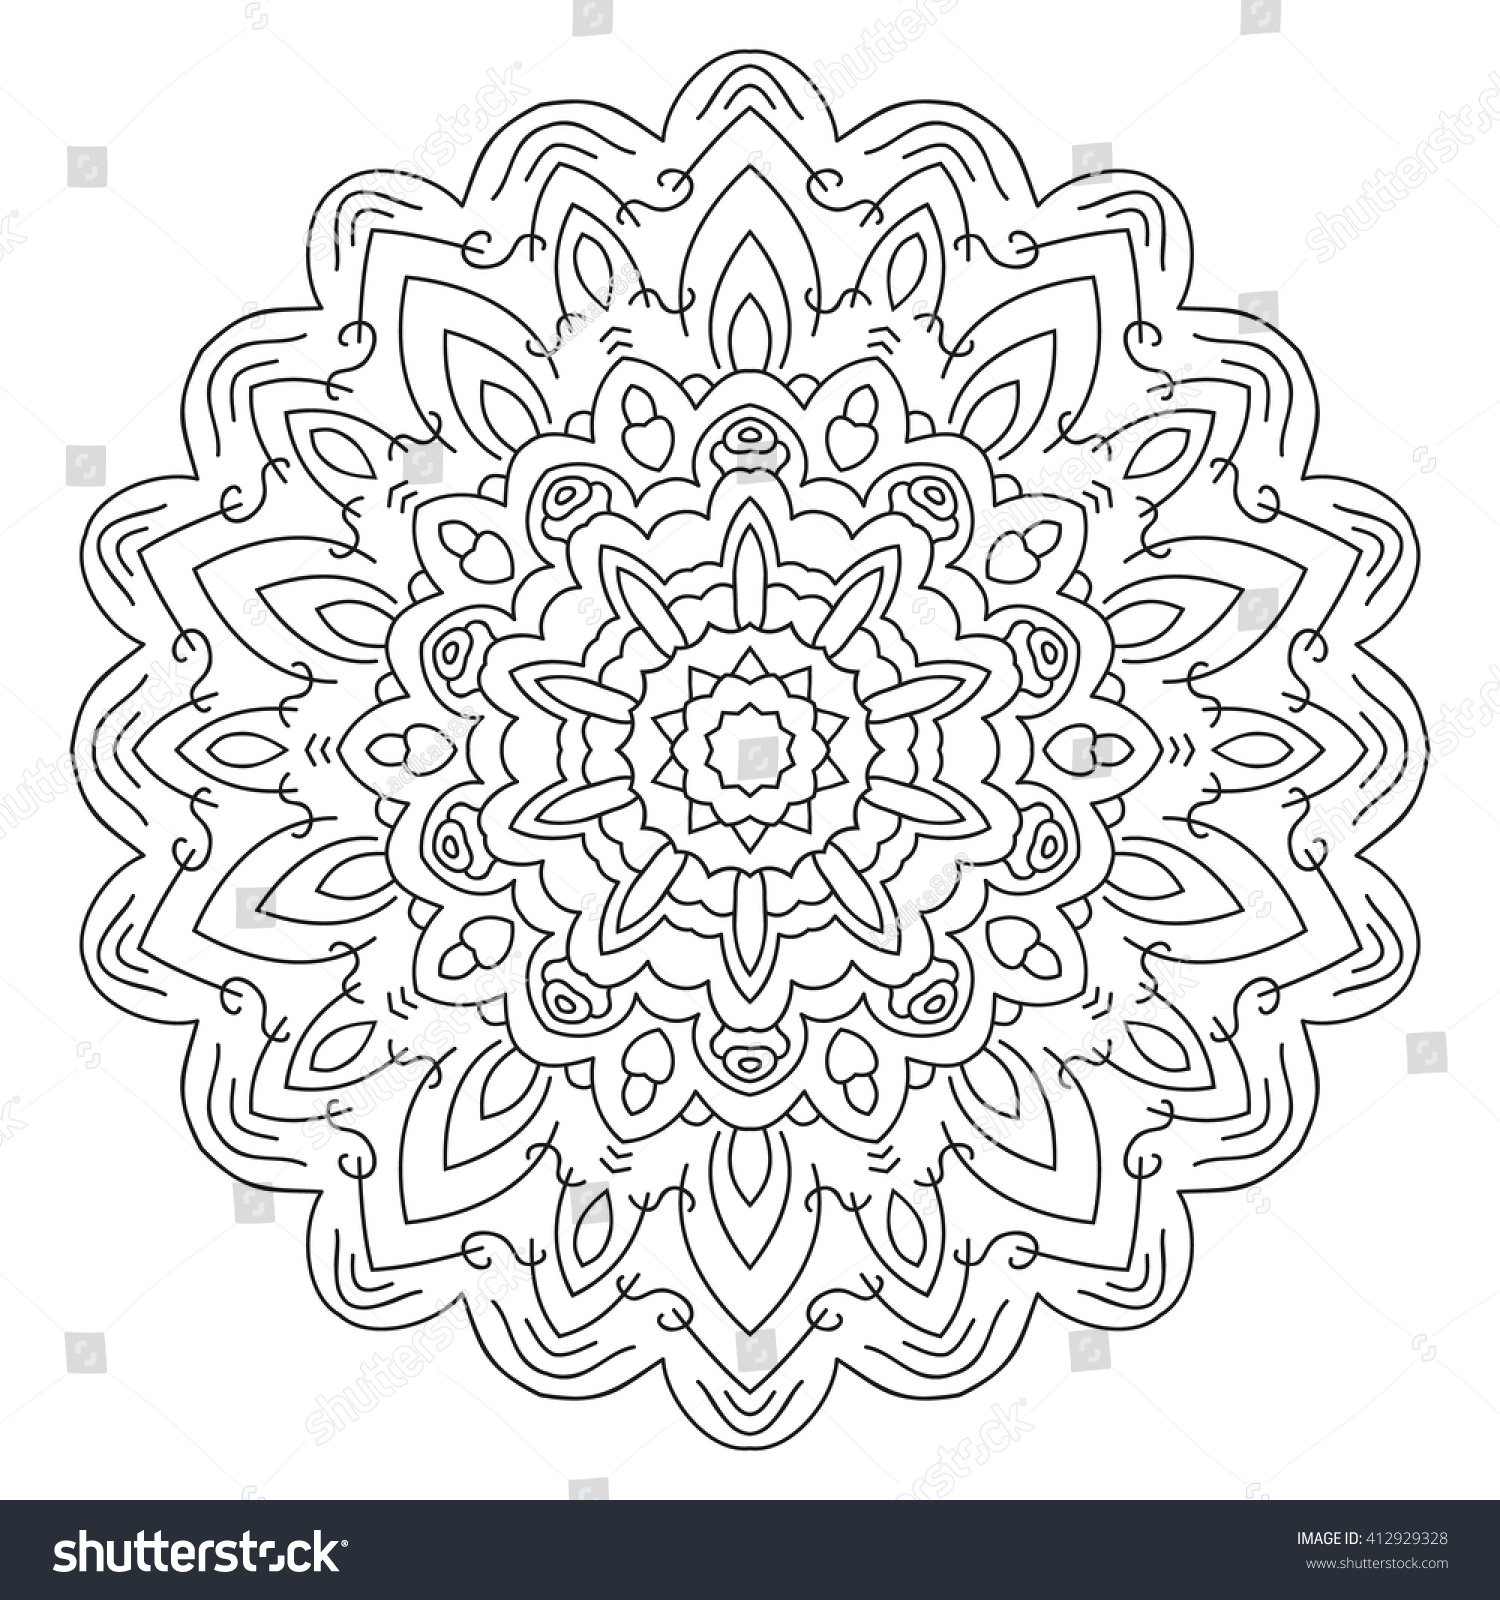 Symmetrical Circular Pattern Mandala. Coloring Page For Adults. Stock ...